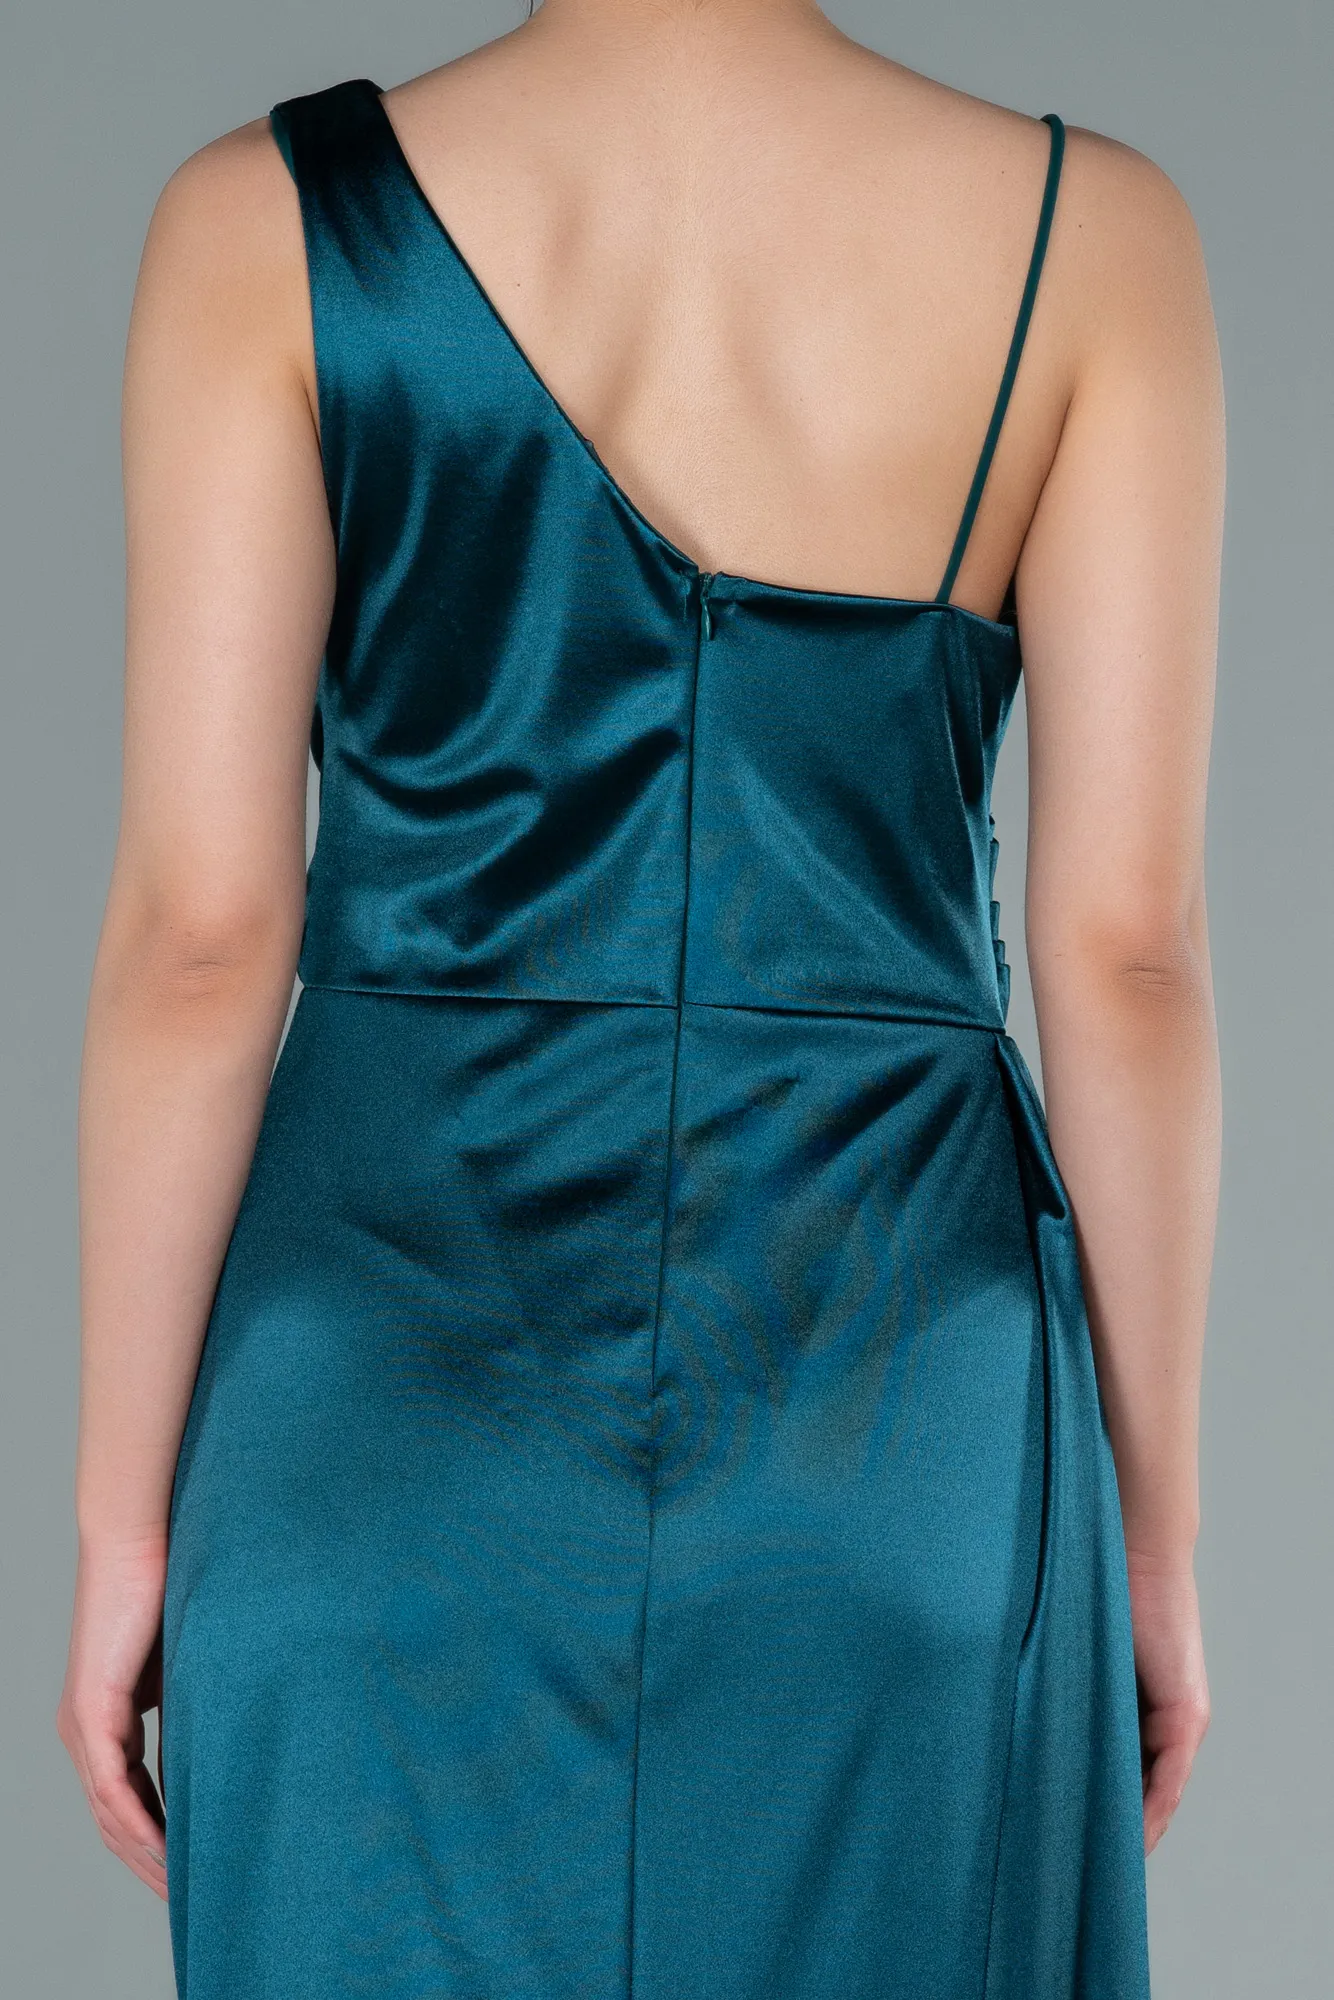 Emerald Green-Long Plus Size Evening Dress ABU2932